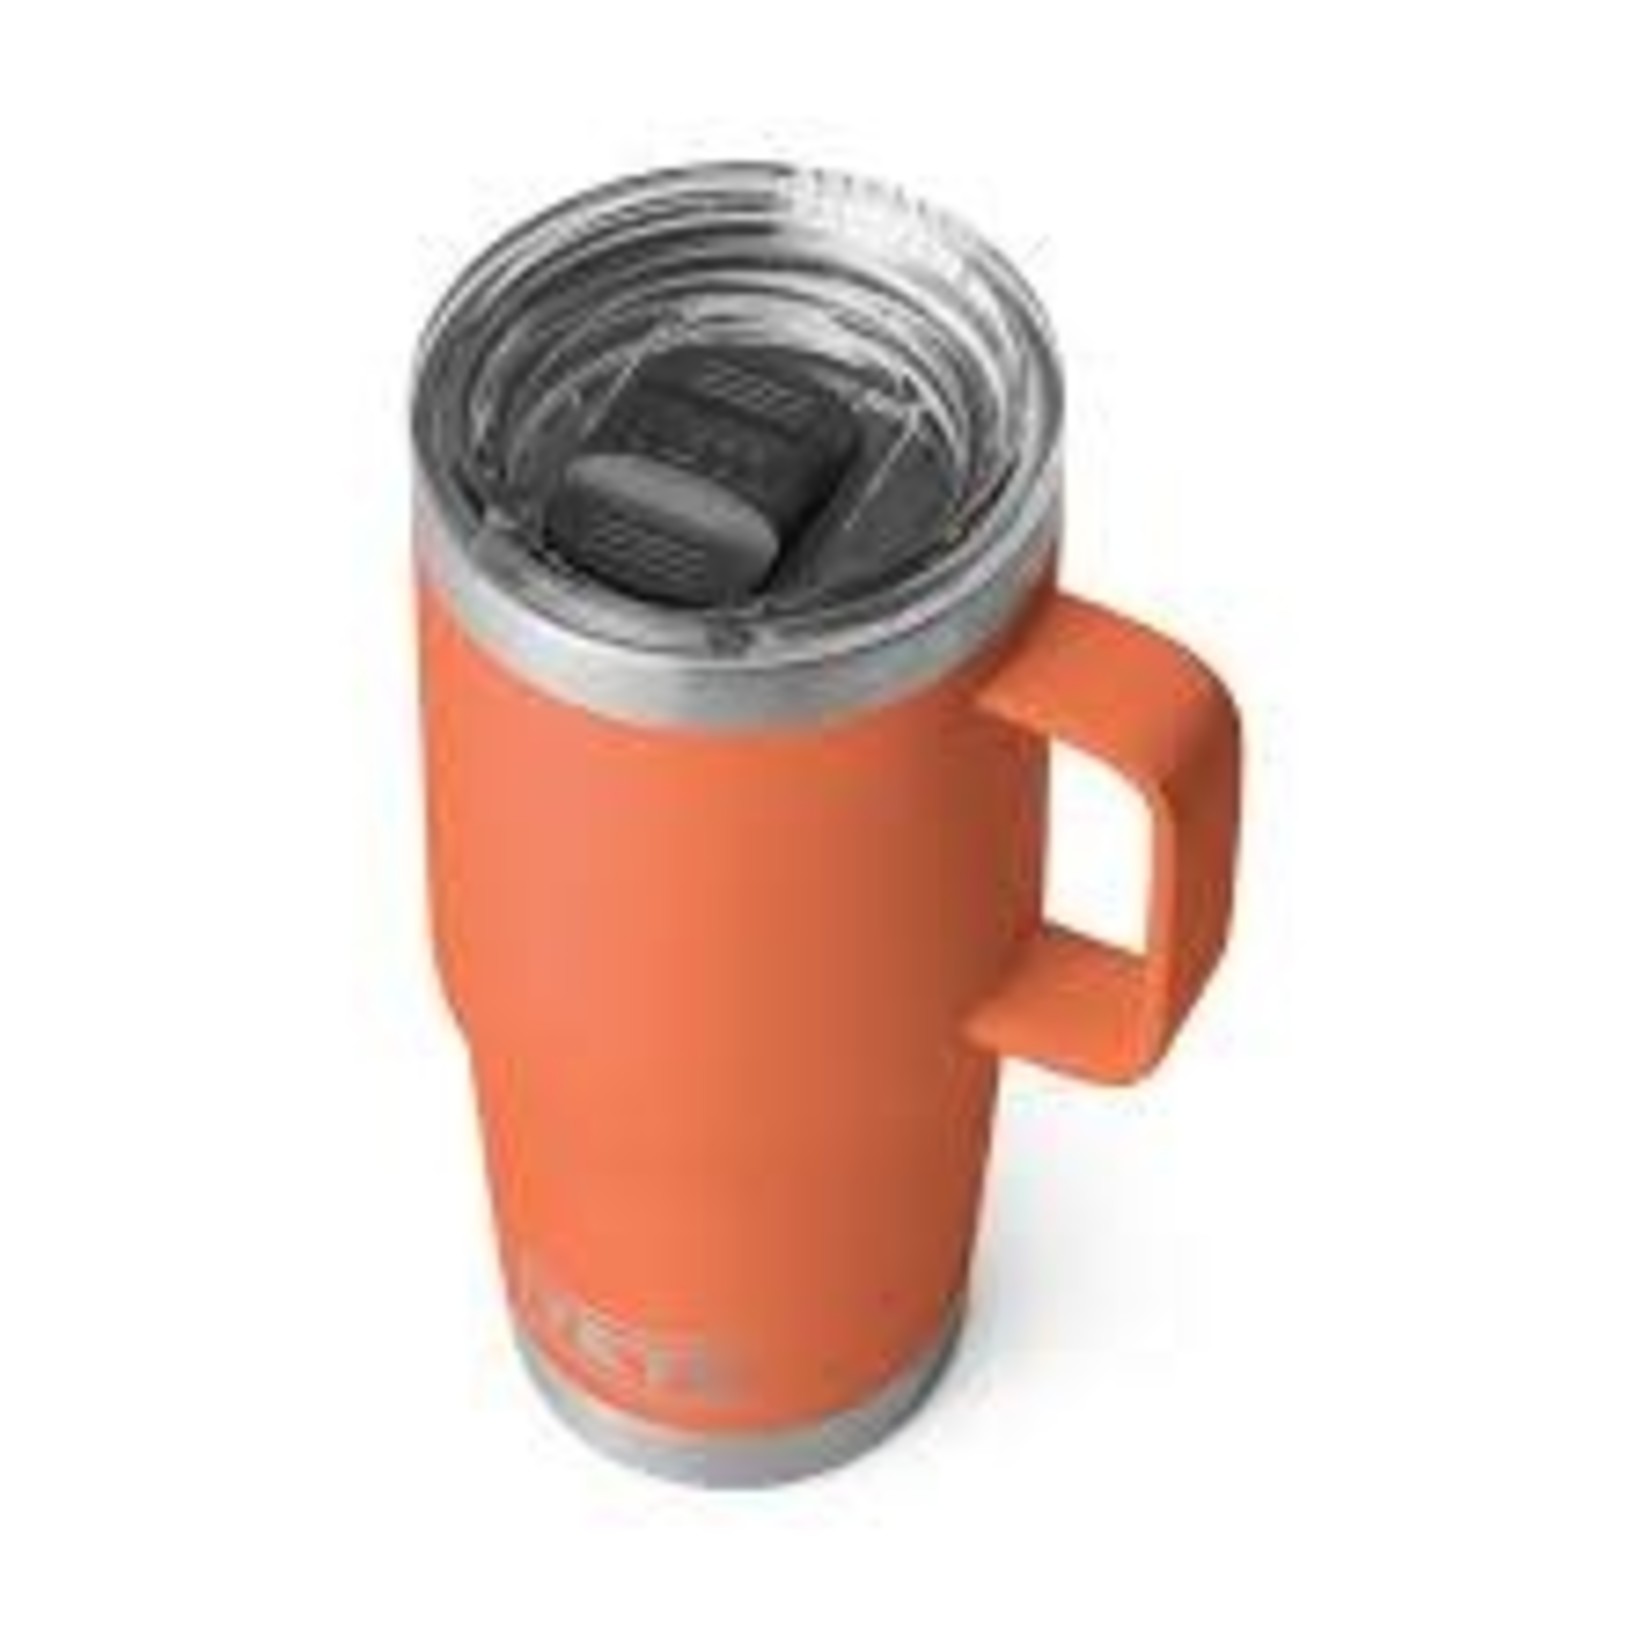 Yeti Rambler travel mug